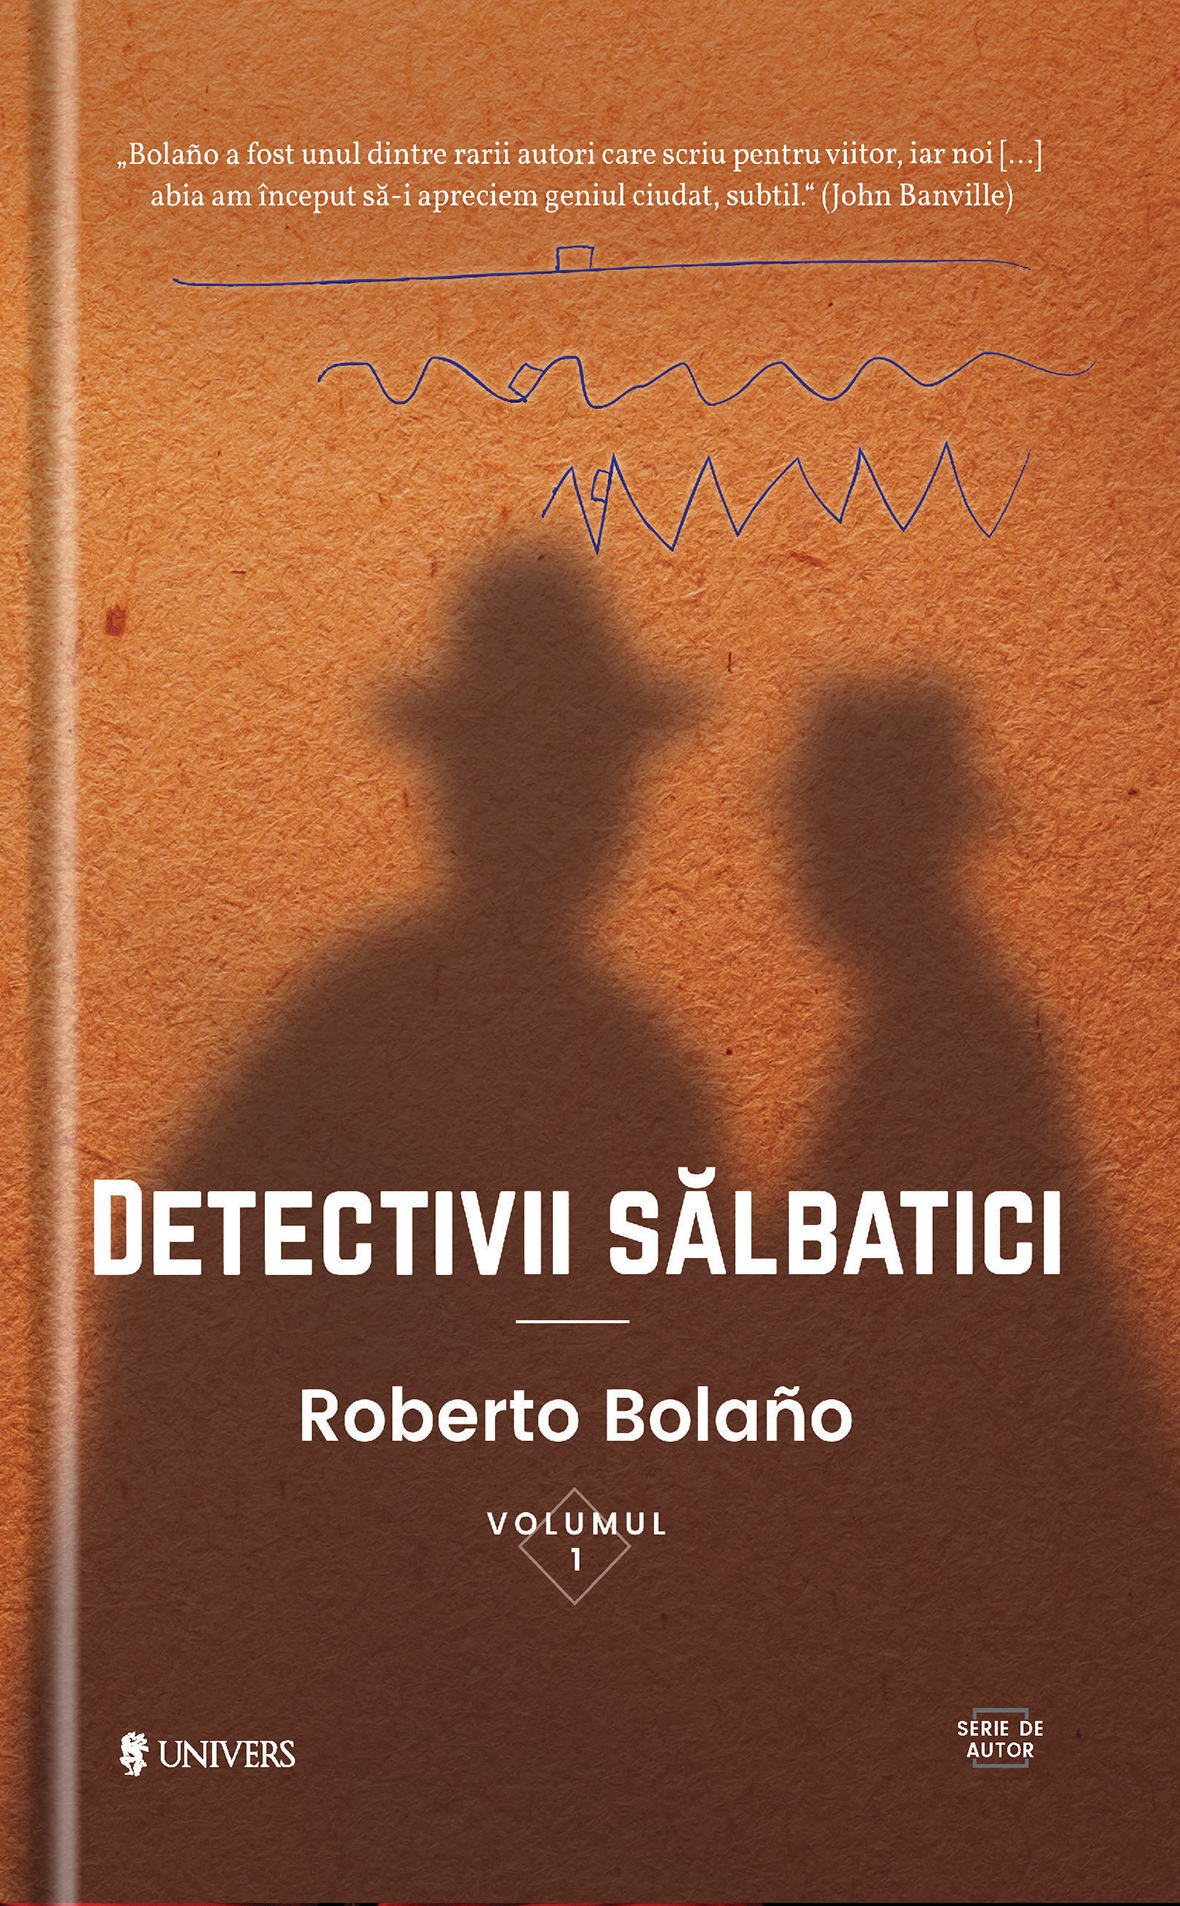 Detectivii salbatici | Roberto Bolano carturesti.ro poza bestsellers.ro